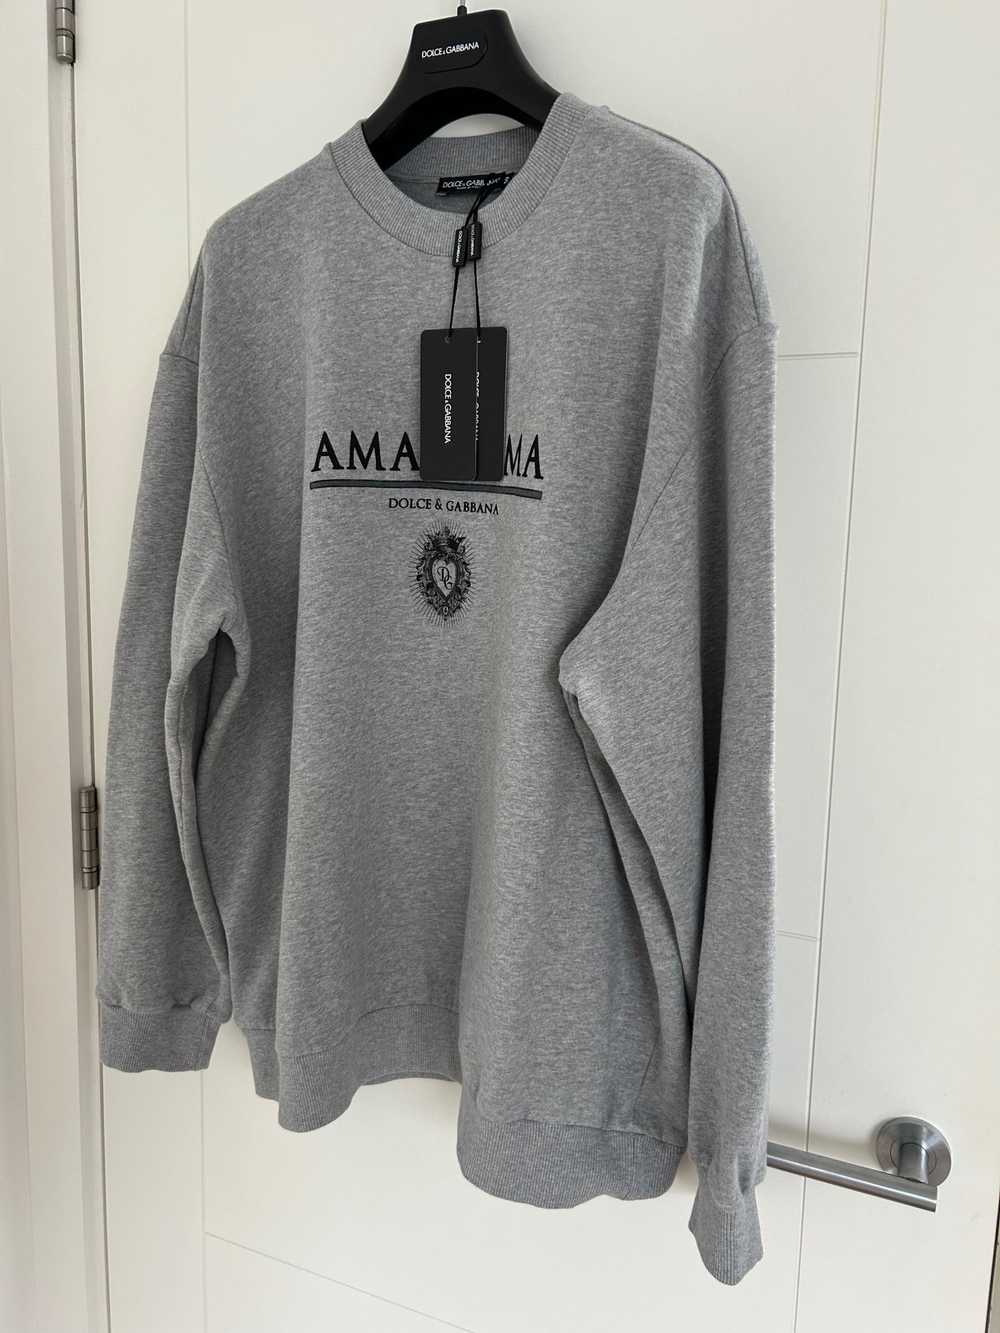 Dolce & Gabbana Amari Ama Cotton Jersey Sweatshirt - image 5